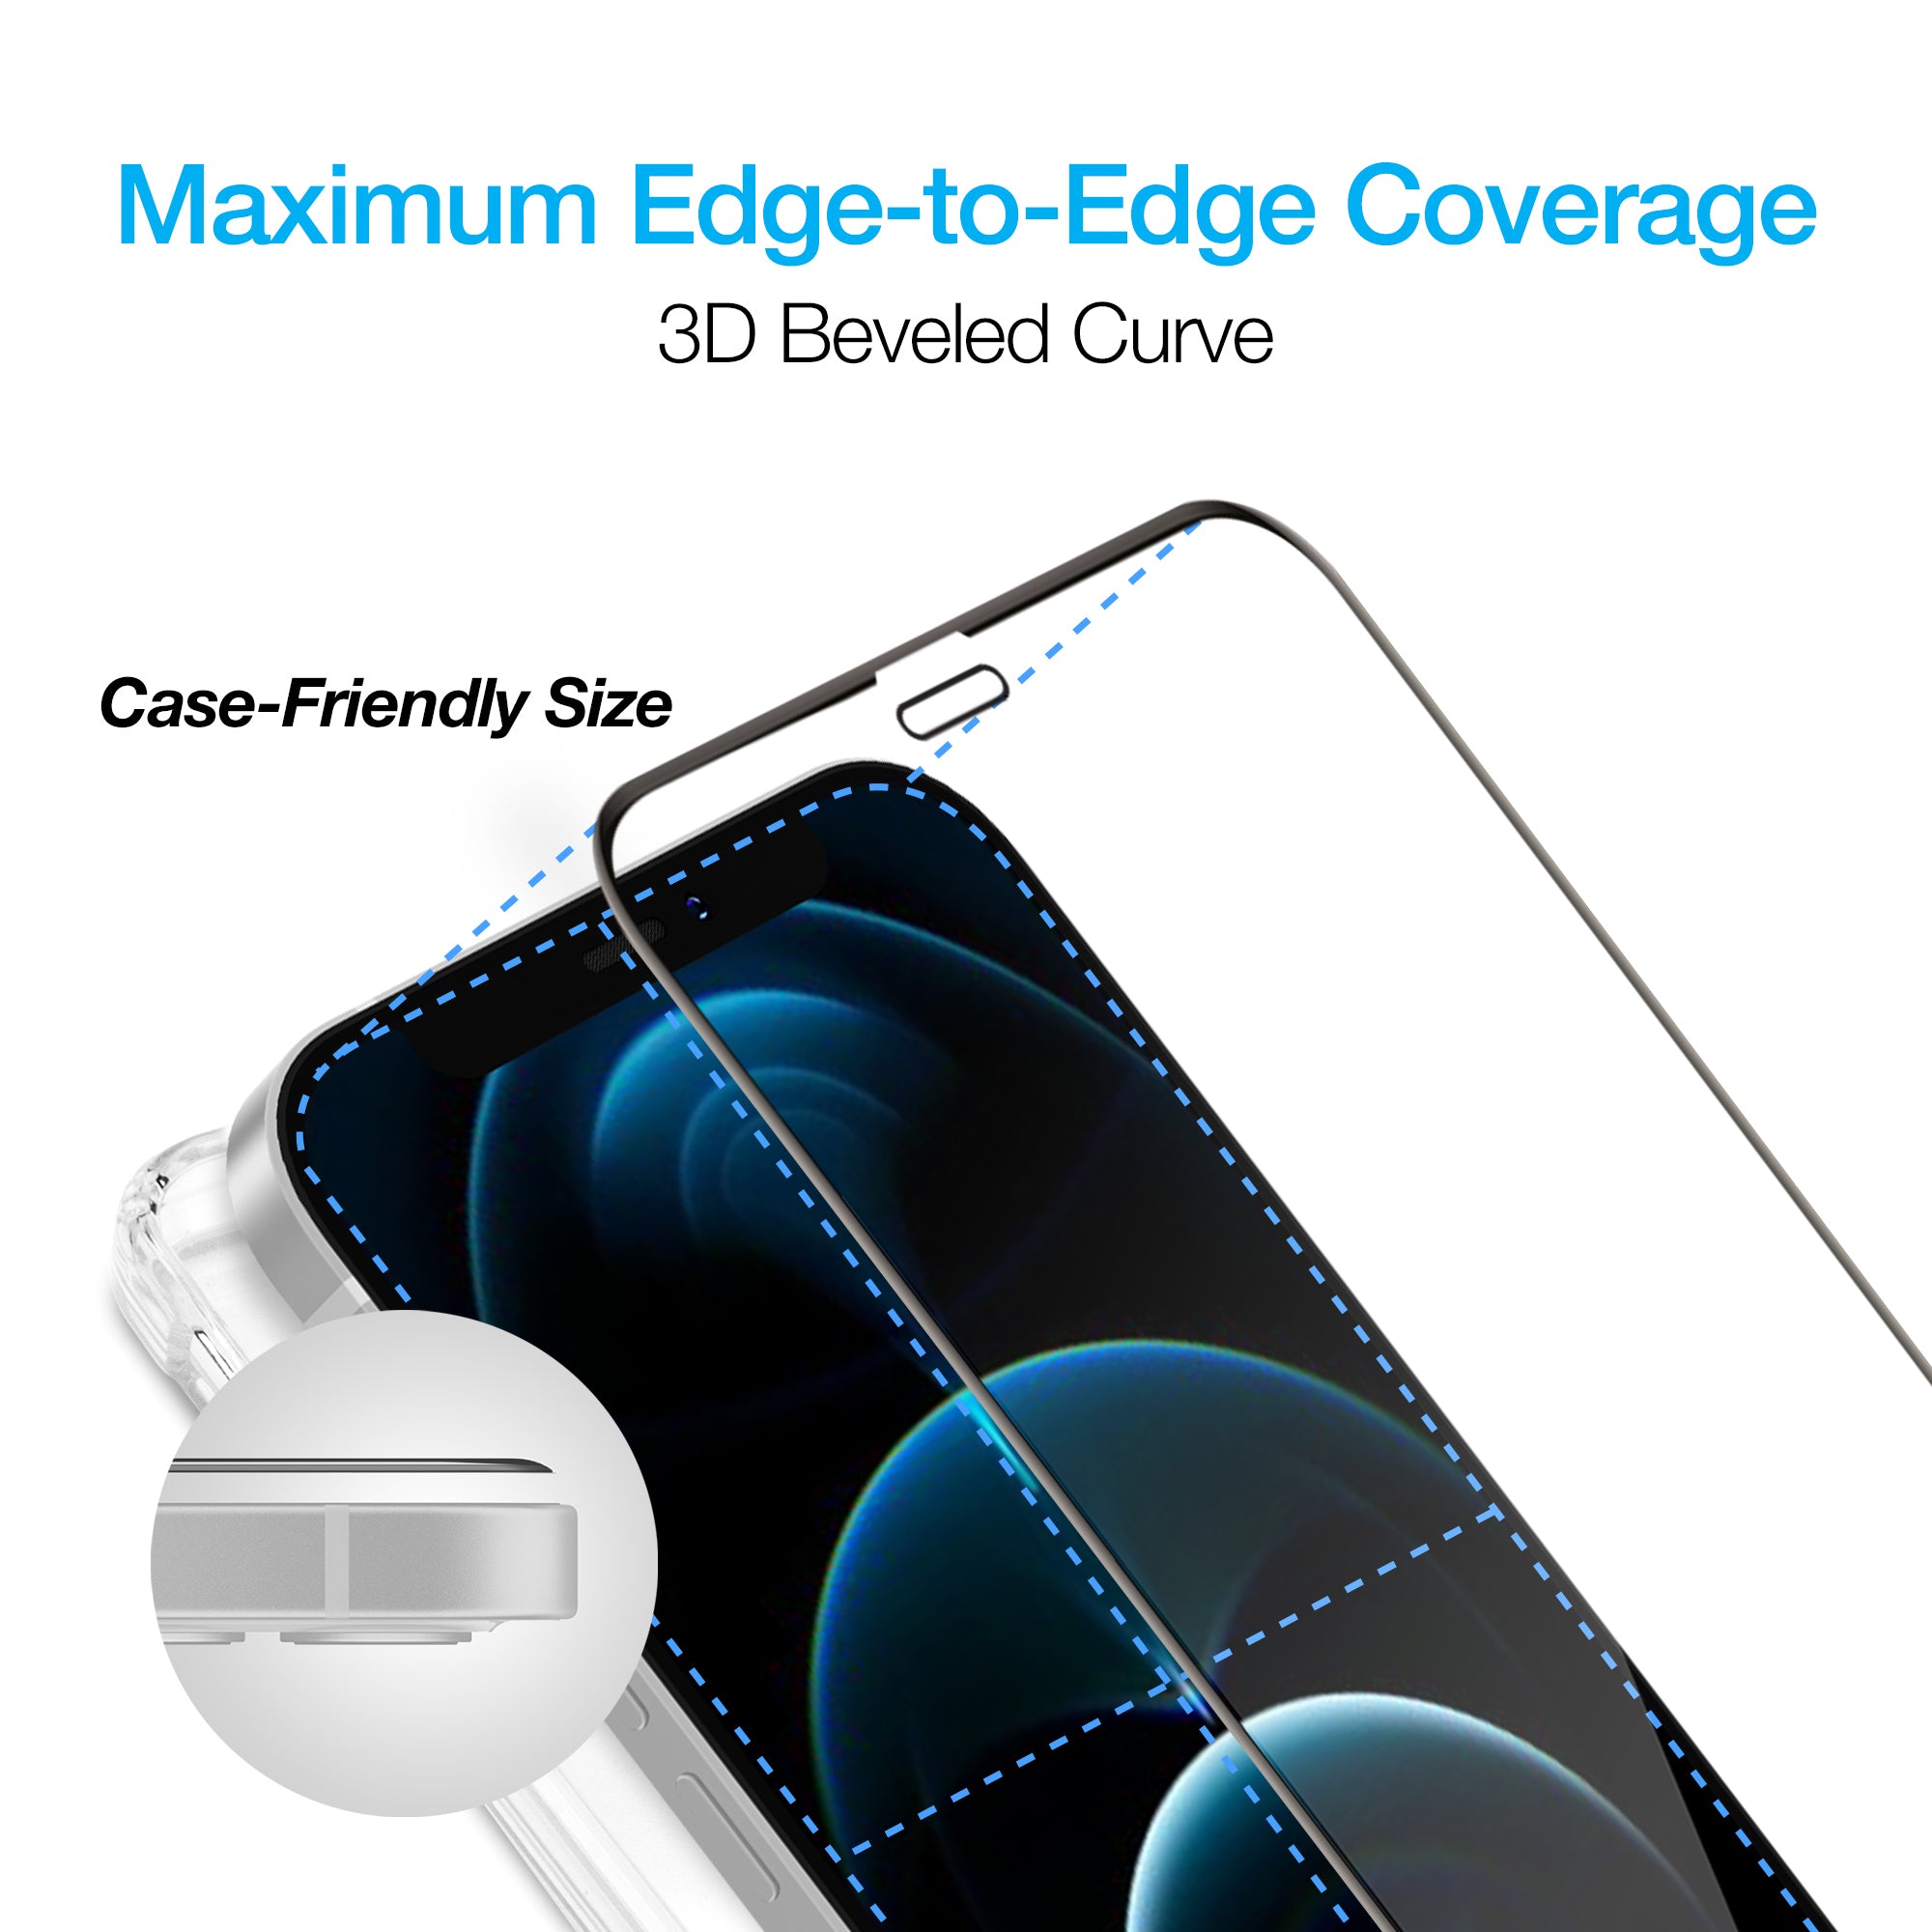 Premium Protective Glass for iPhone 13 / 13 Pro – Armor Edge